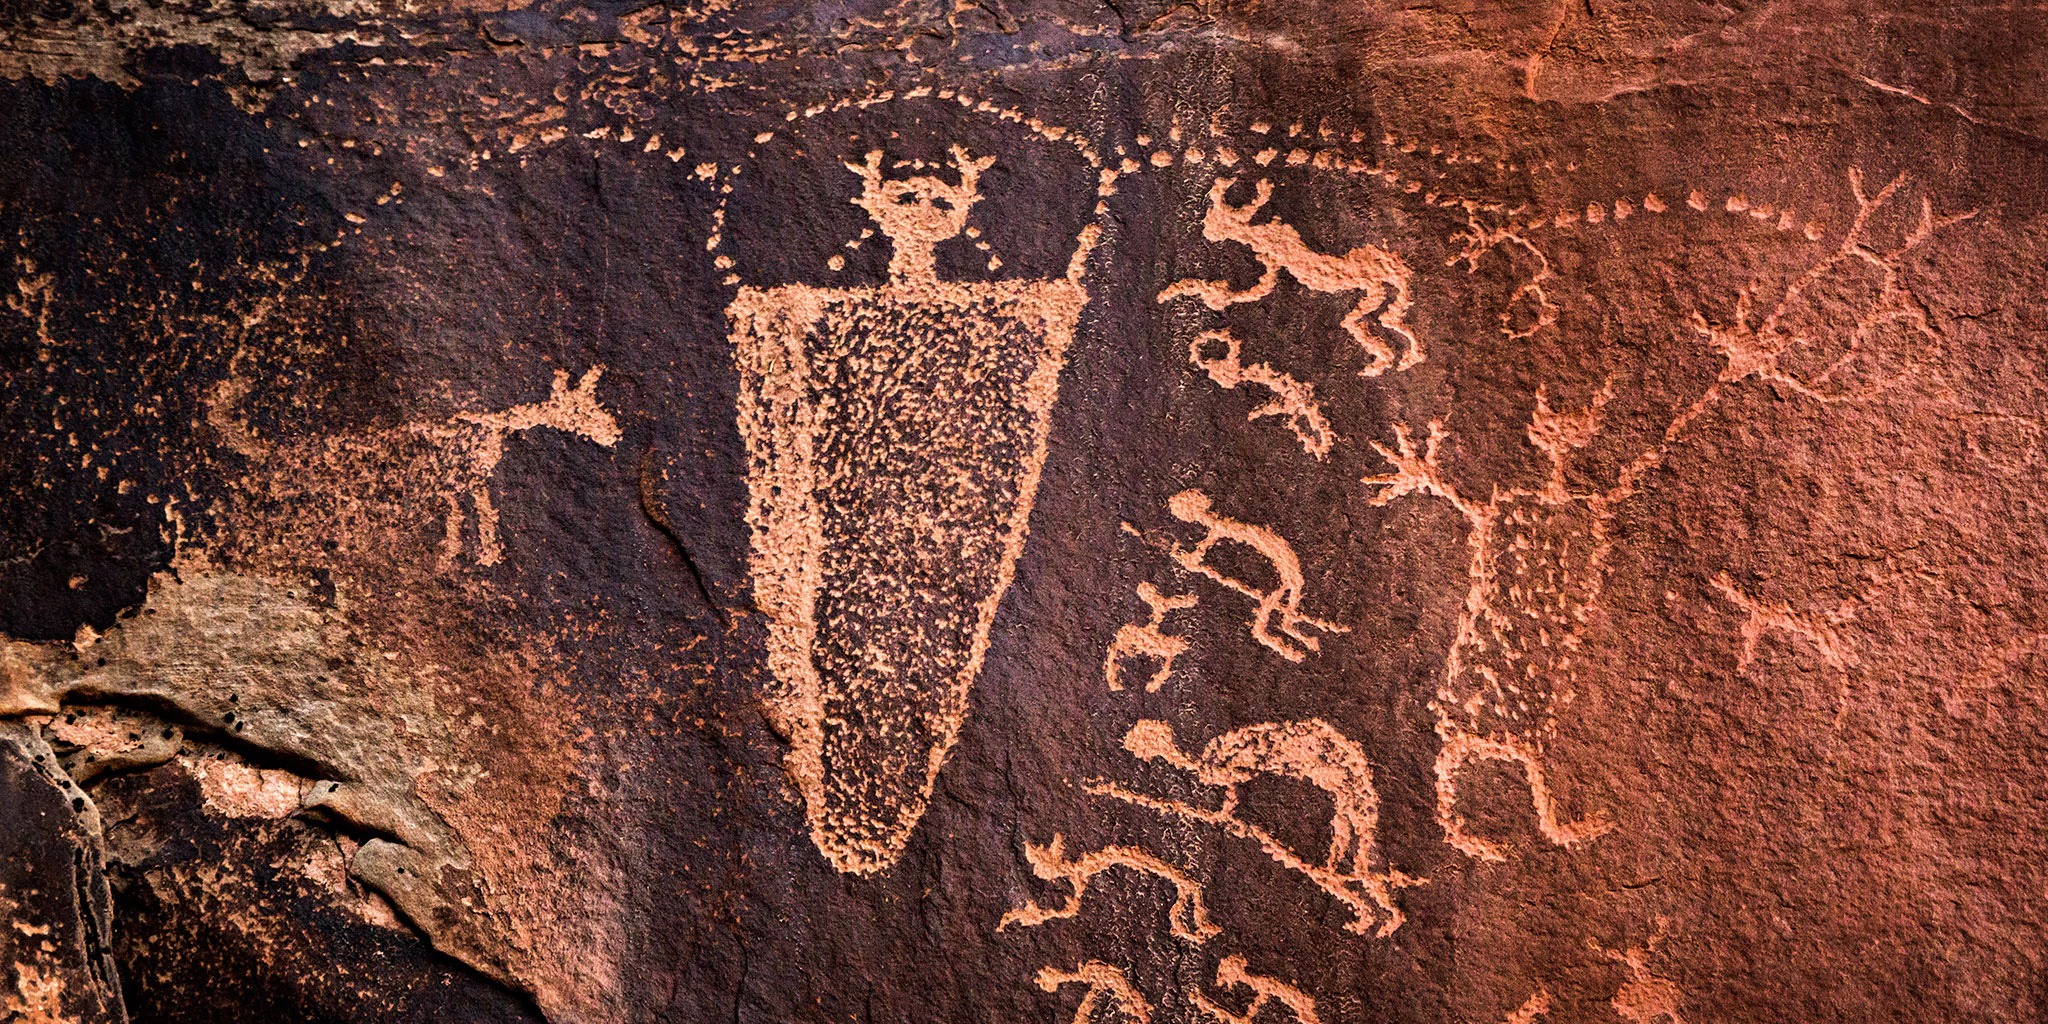 Moab Rock Art Revisits